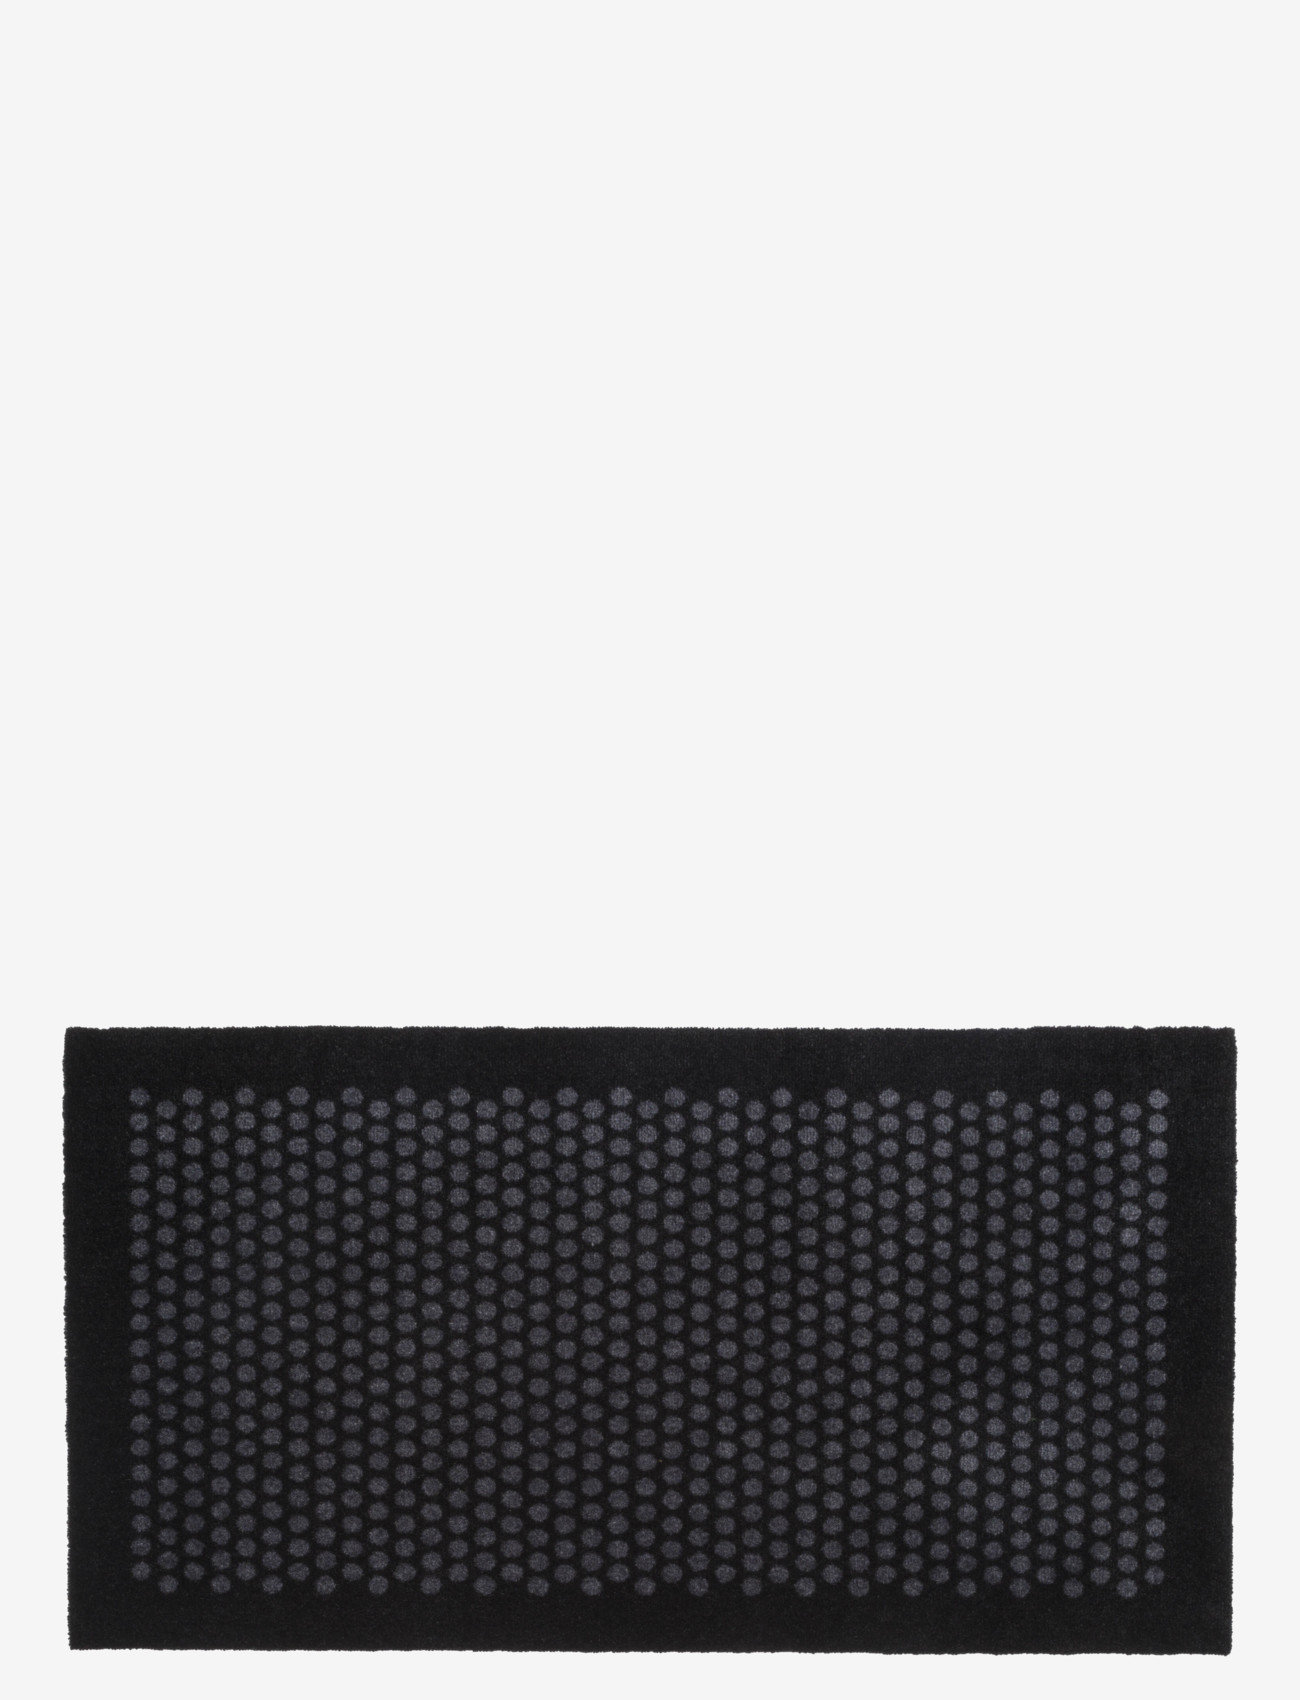 tica copenhagen - Floormat polyamide, 120x67 cm, dot design - dørmåtter - black/grey - 0